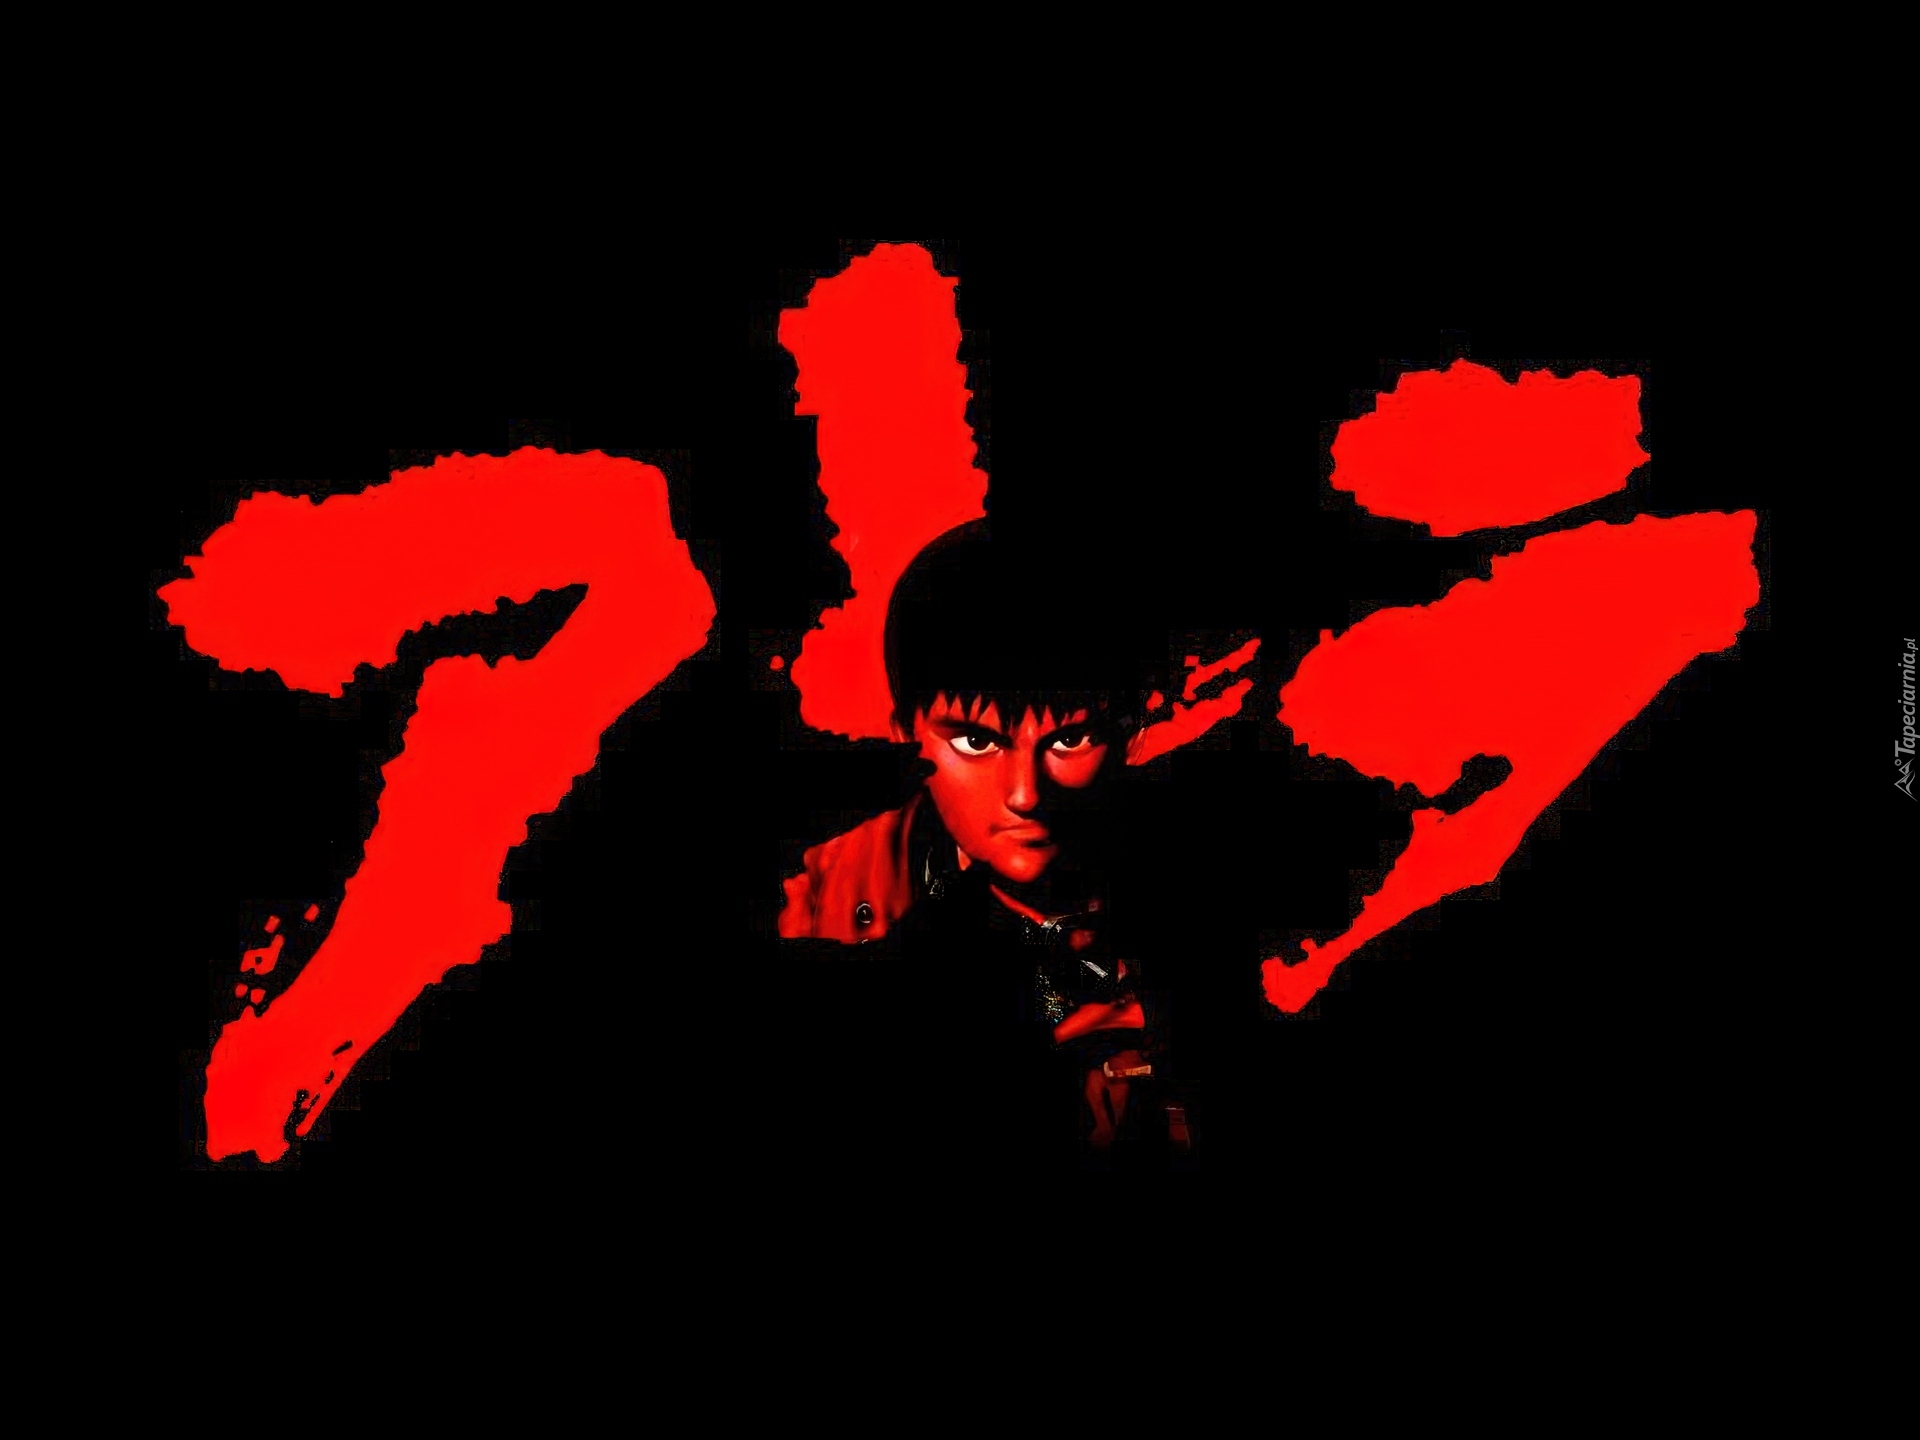 Akira, postać, napis